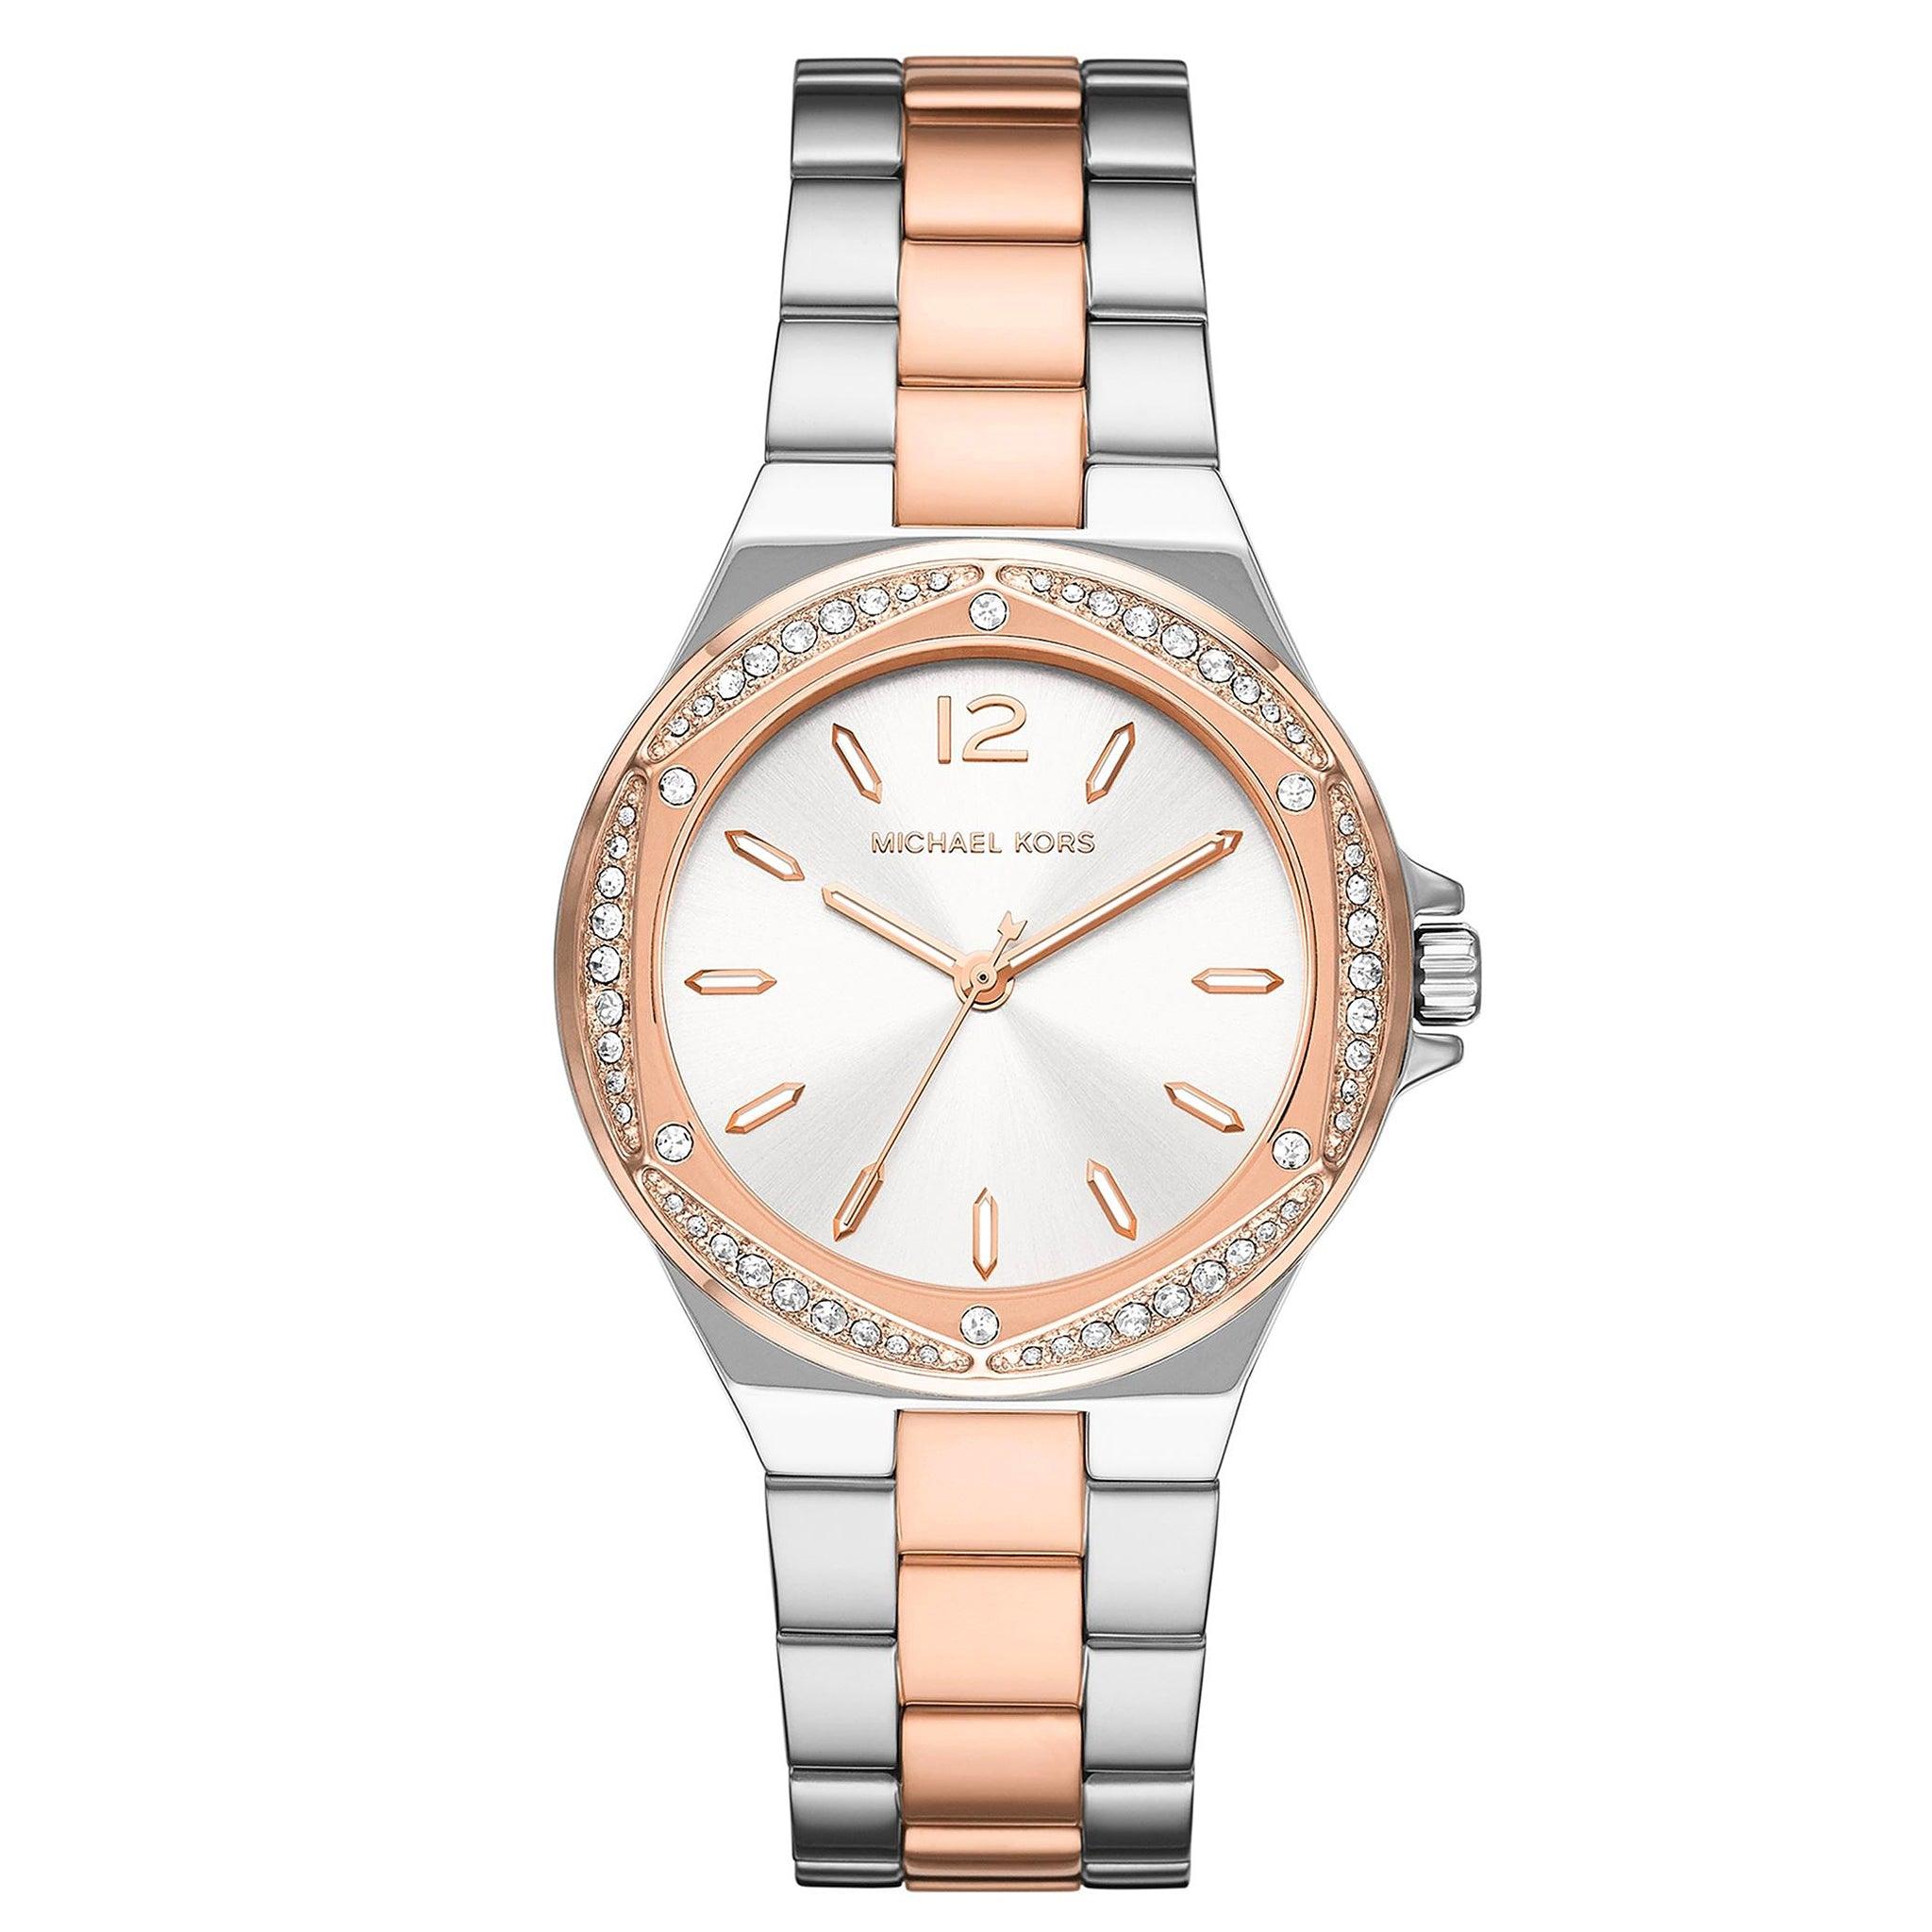 Michael Kors Mk6989 Women's Lennox Quartz Watch With Stainless Steel Strap, Two-Tone